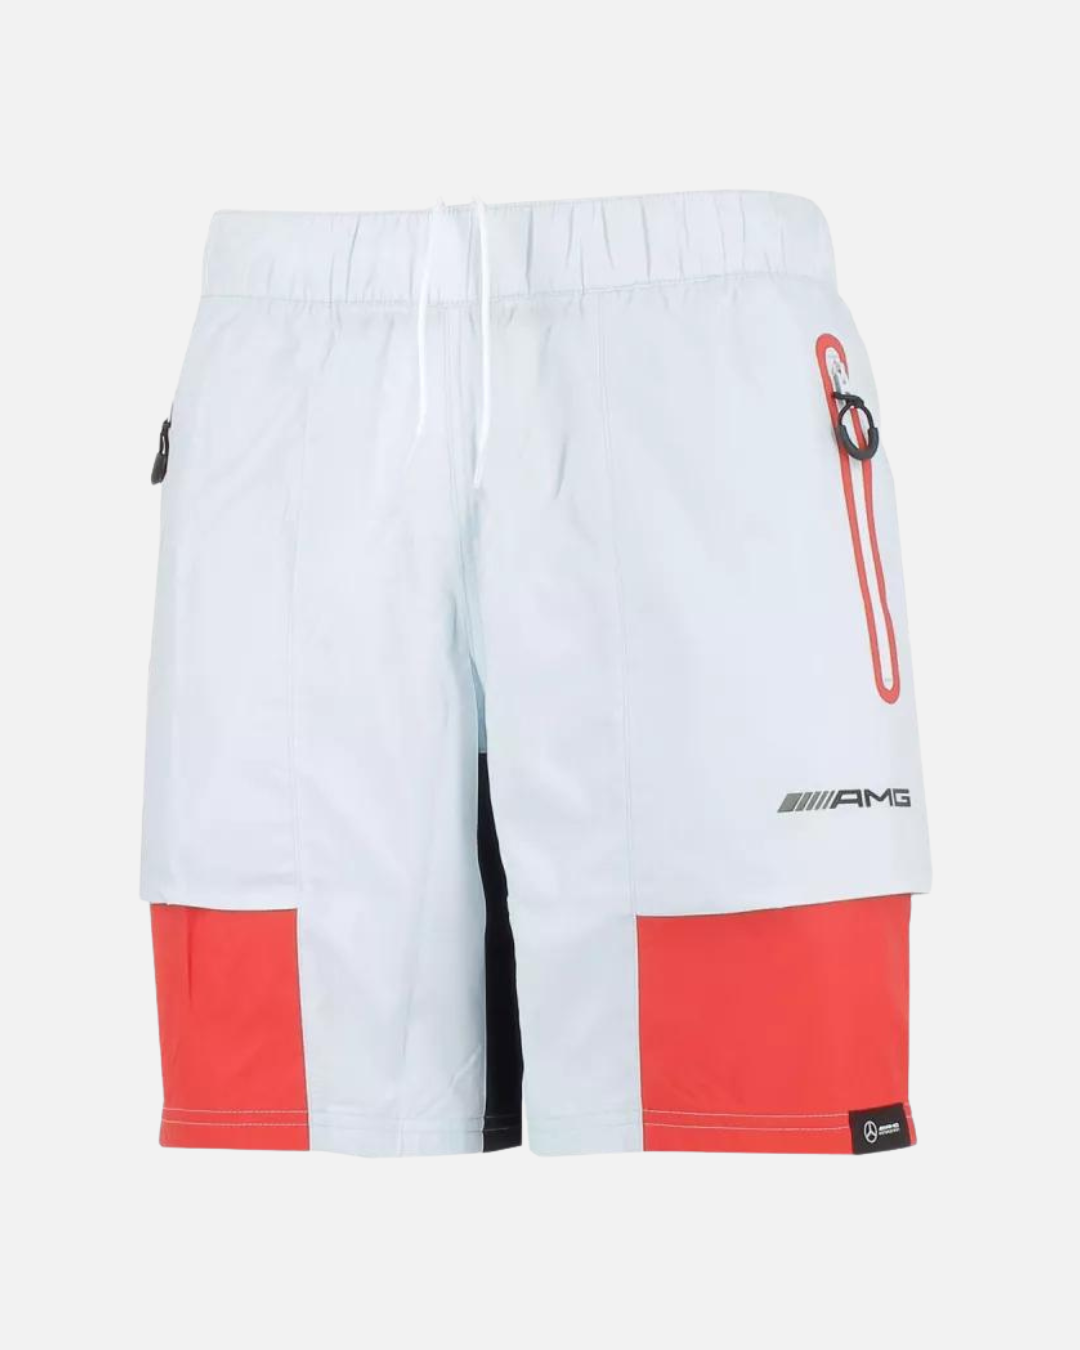 Puma Mercedes-AMG Motorsport Shorts - White/Red